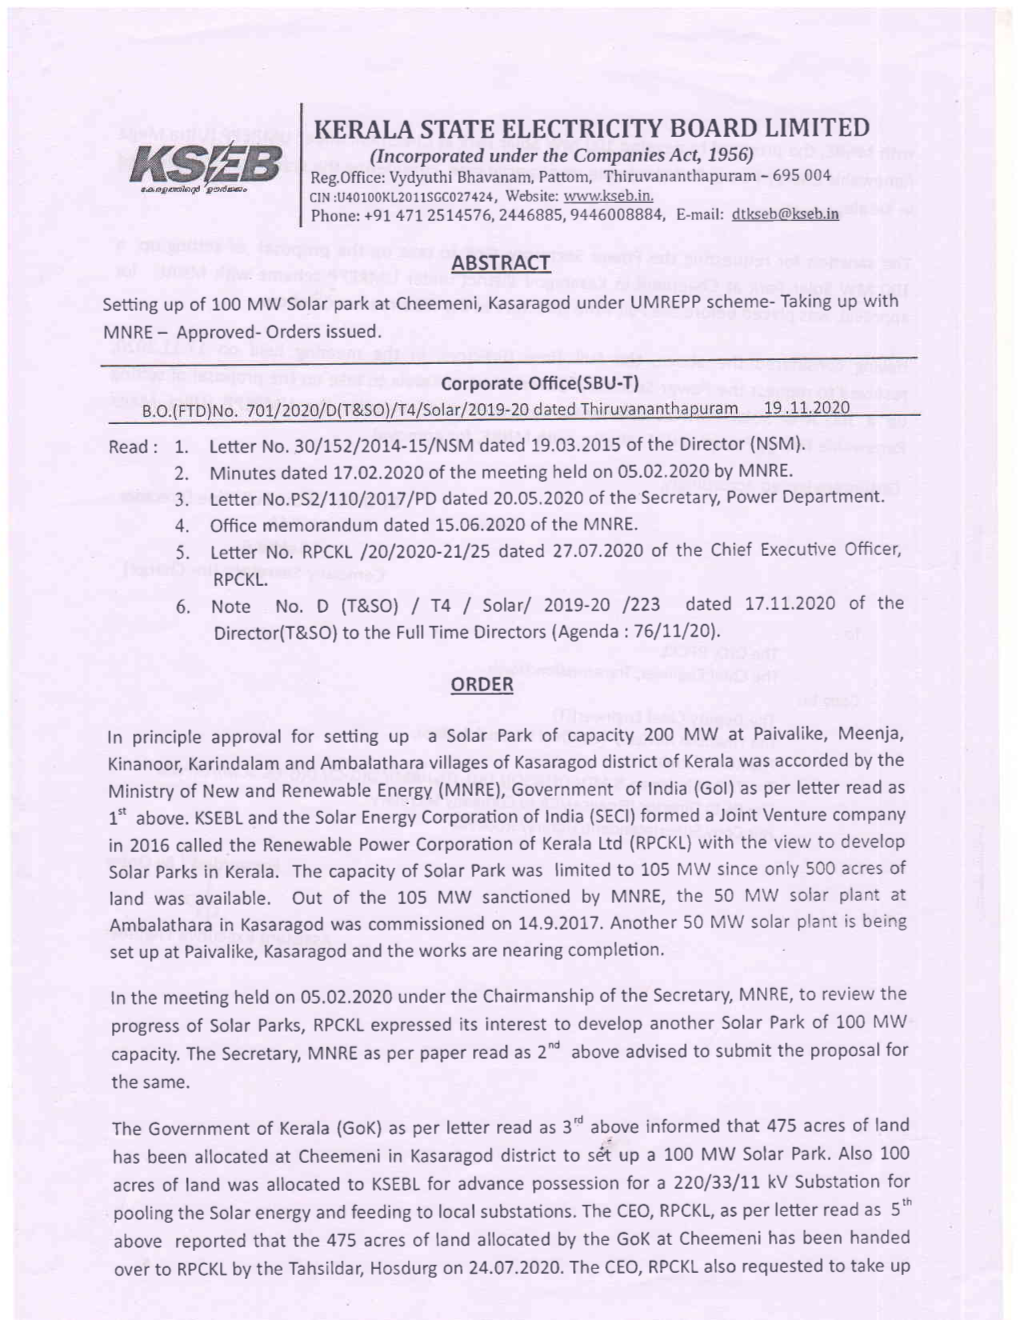 IGRALA STATE ELECTRICITY BOARD LIMITED (Incorporateil Under the Companies Act' 1956) Reg,Office: Vydyuthi Bhavanam, Pattom, Thiruvananthapuram - 695 004